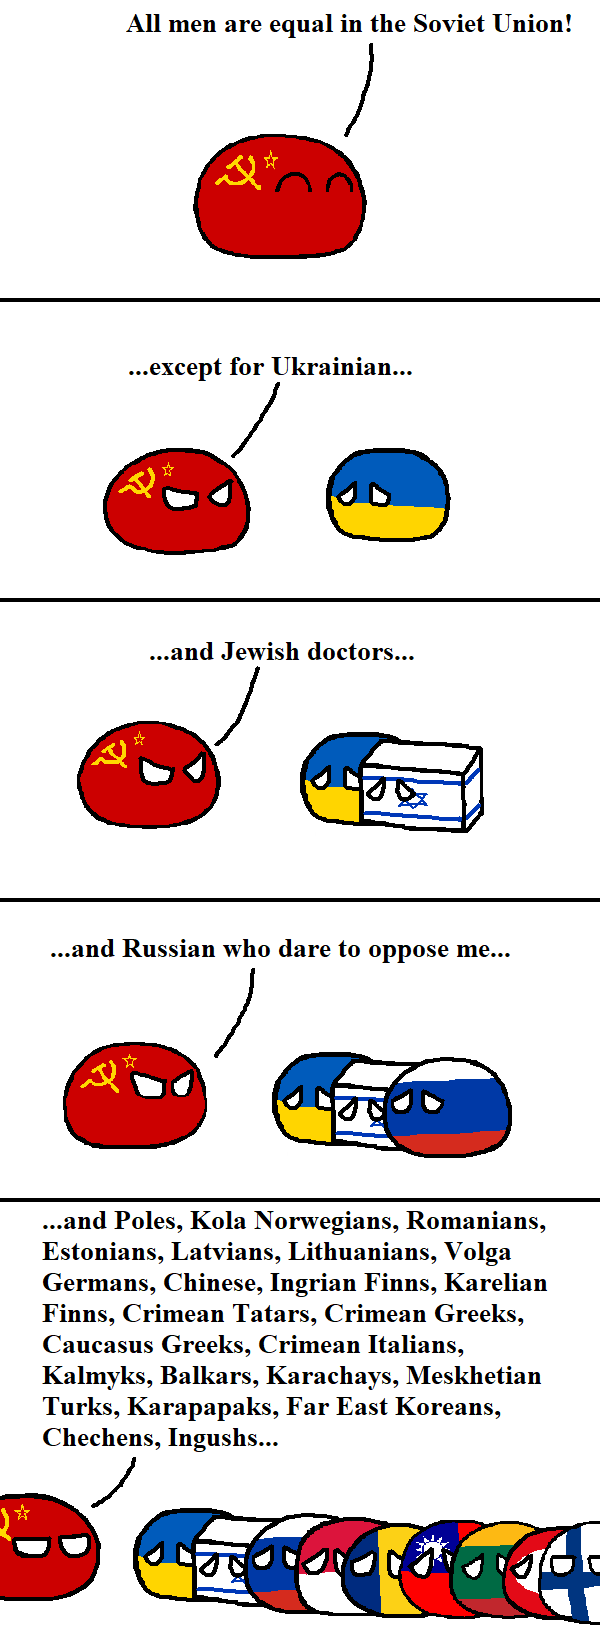 Soviet Equality